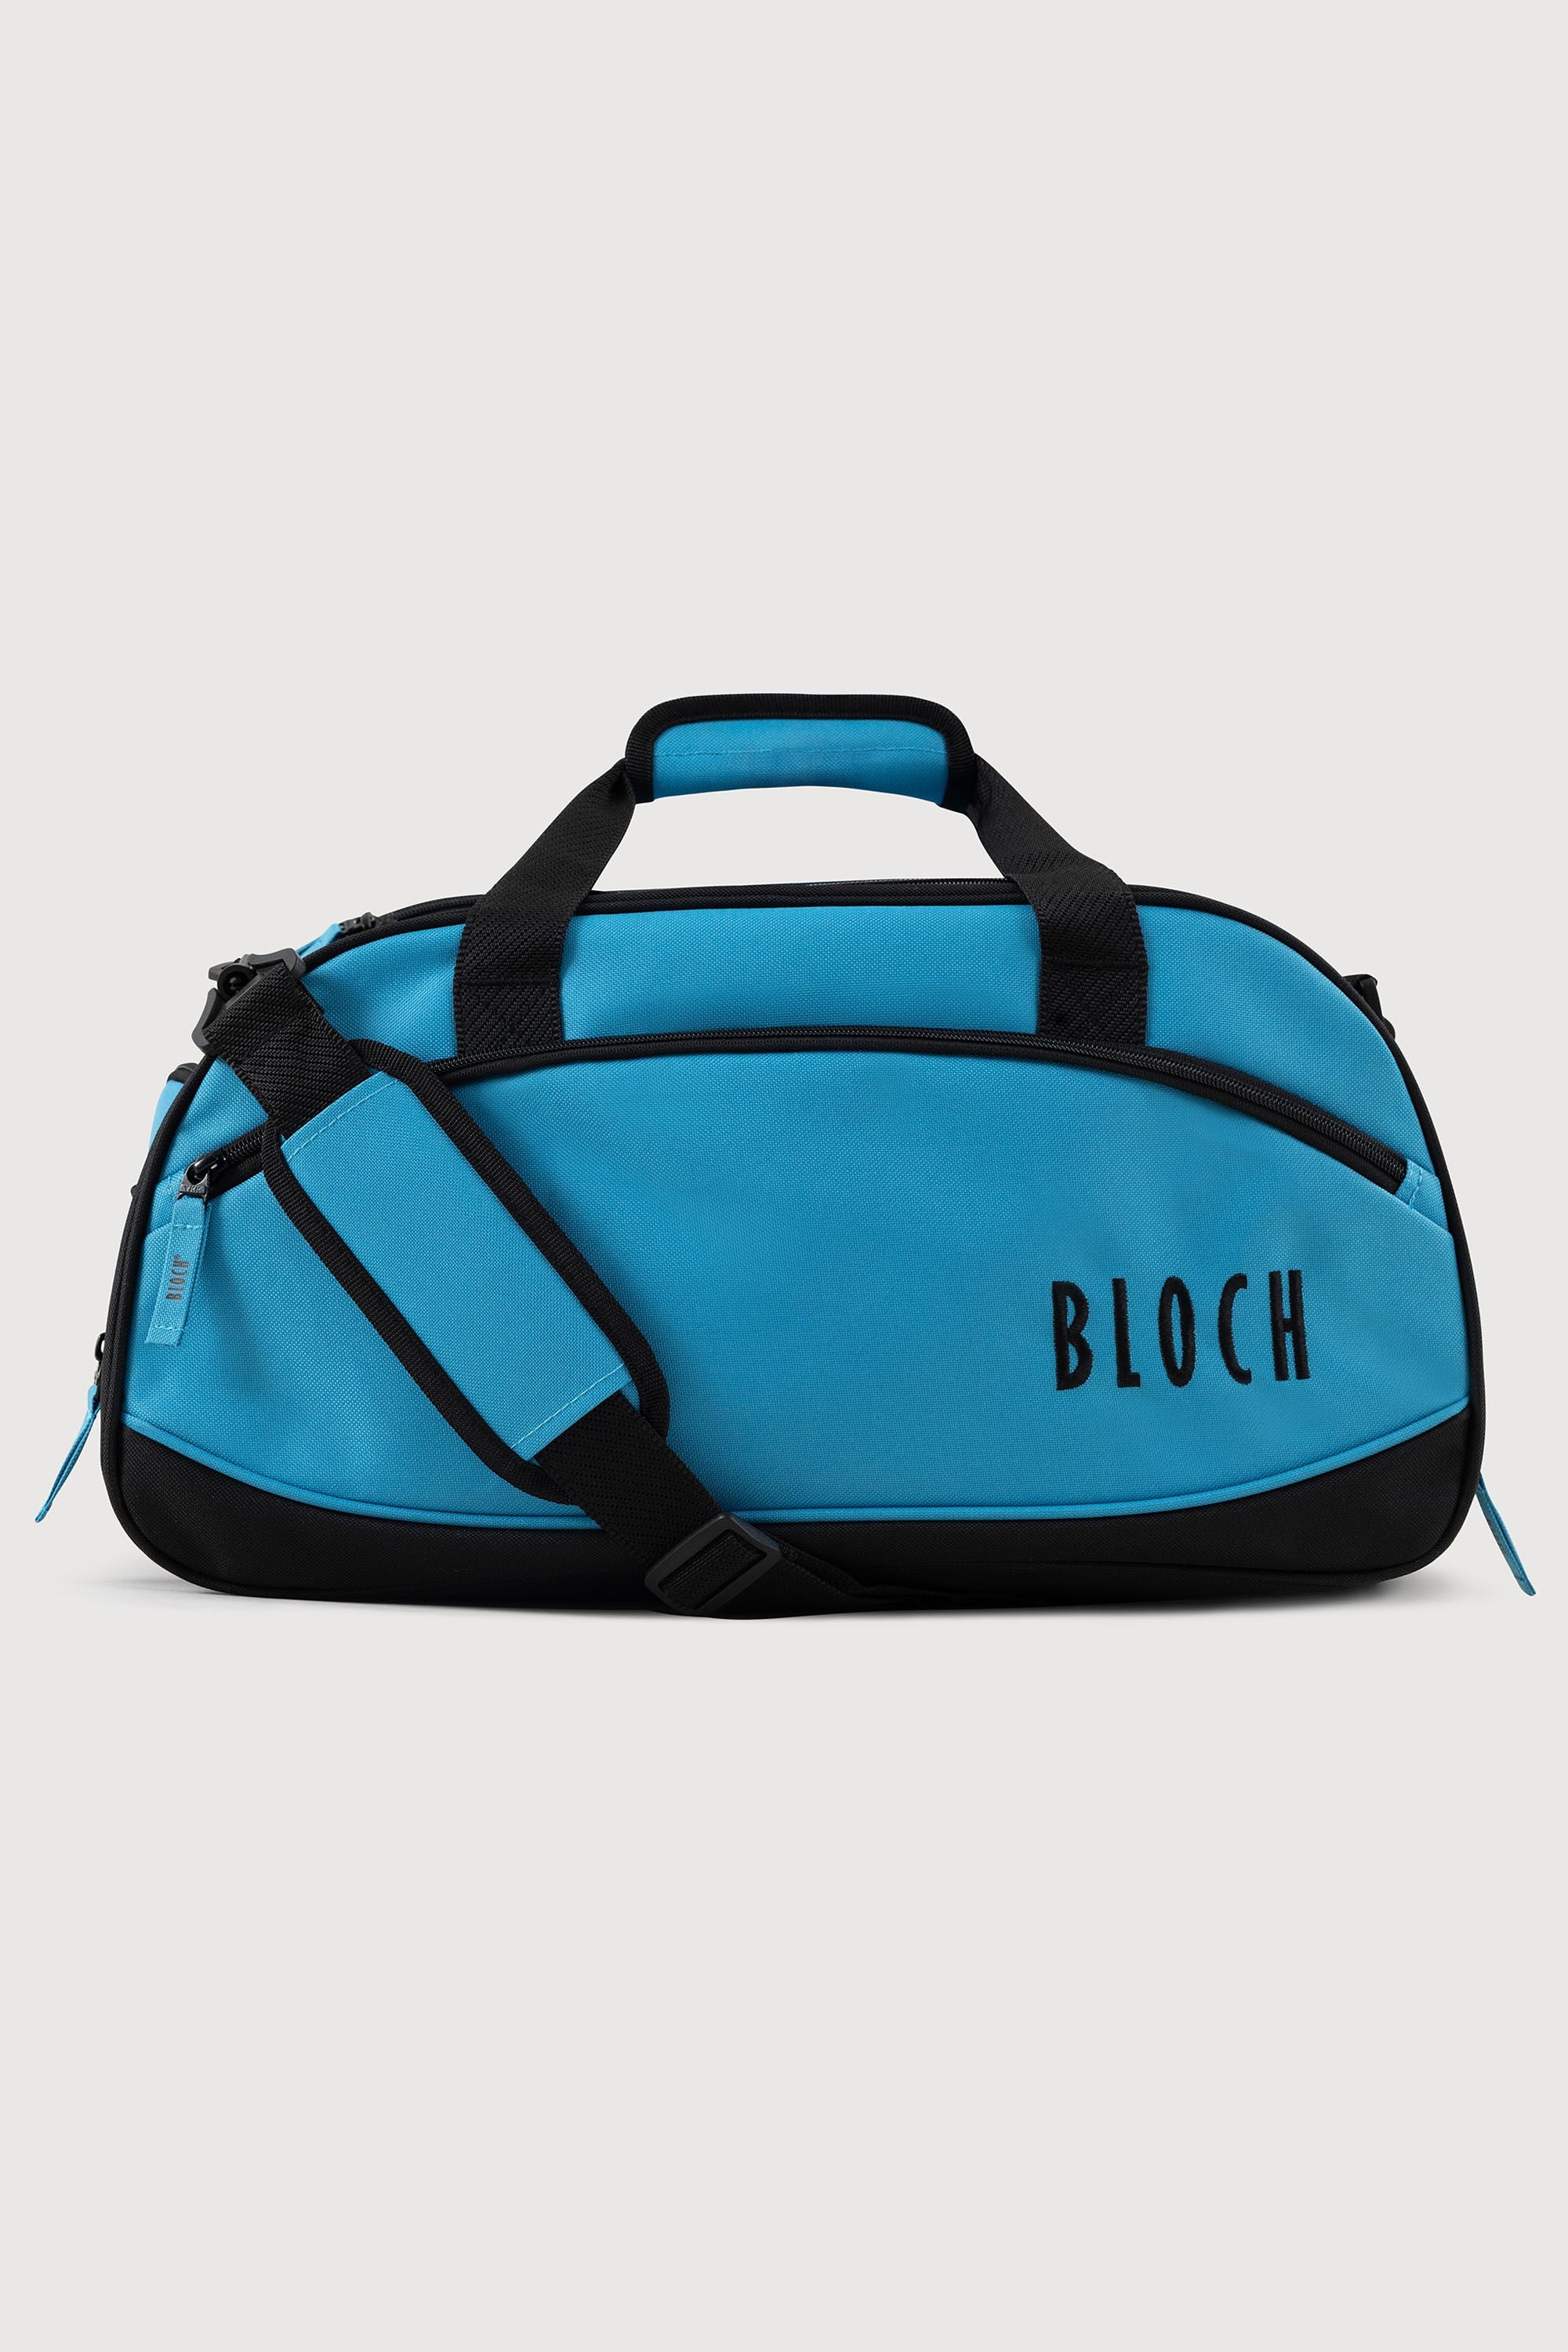 Bloch Two Tone Dance Bag, Peacock/Black Nylon